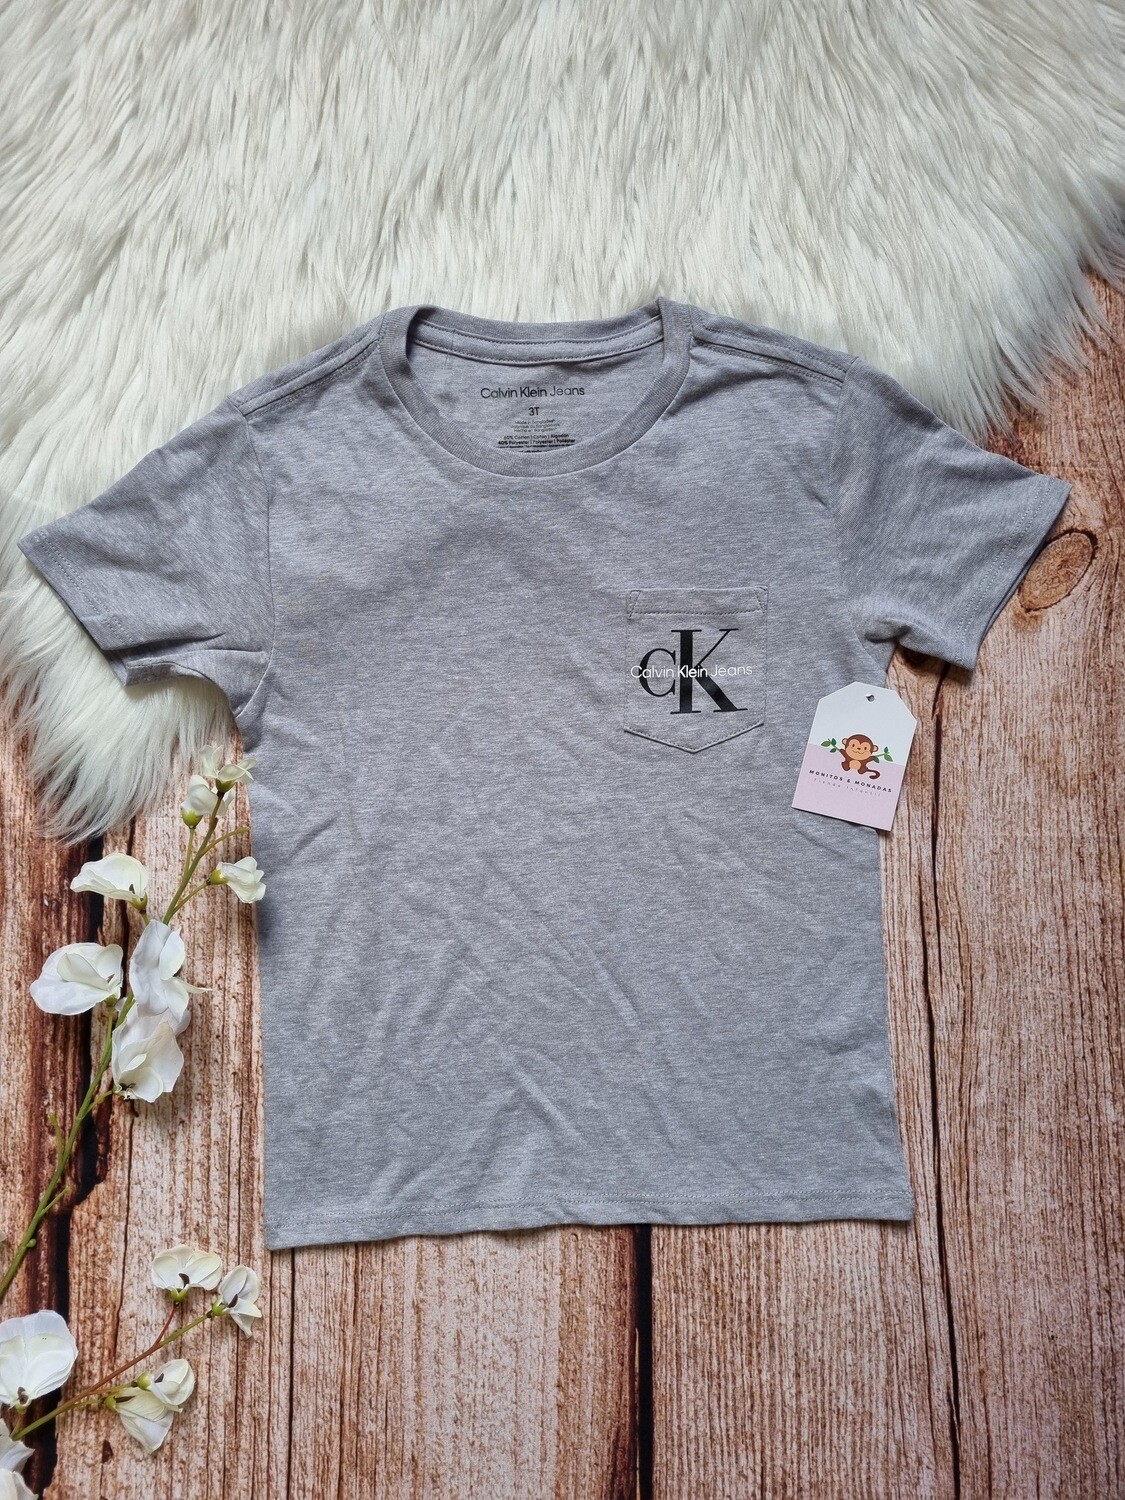 Camiseta gris Calvin Klein, 3T